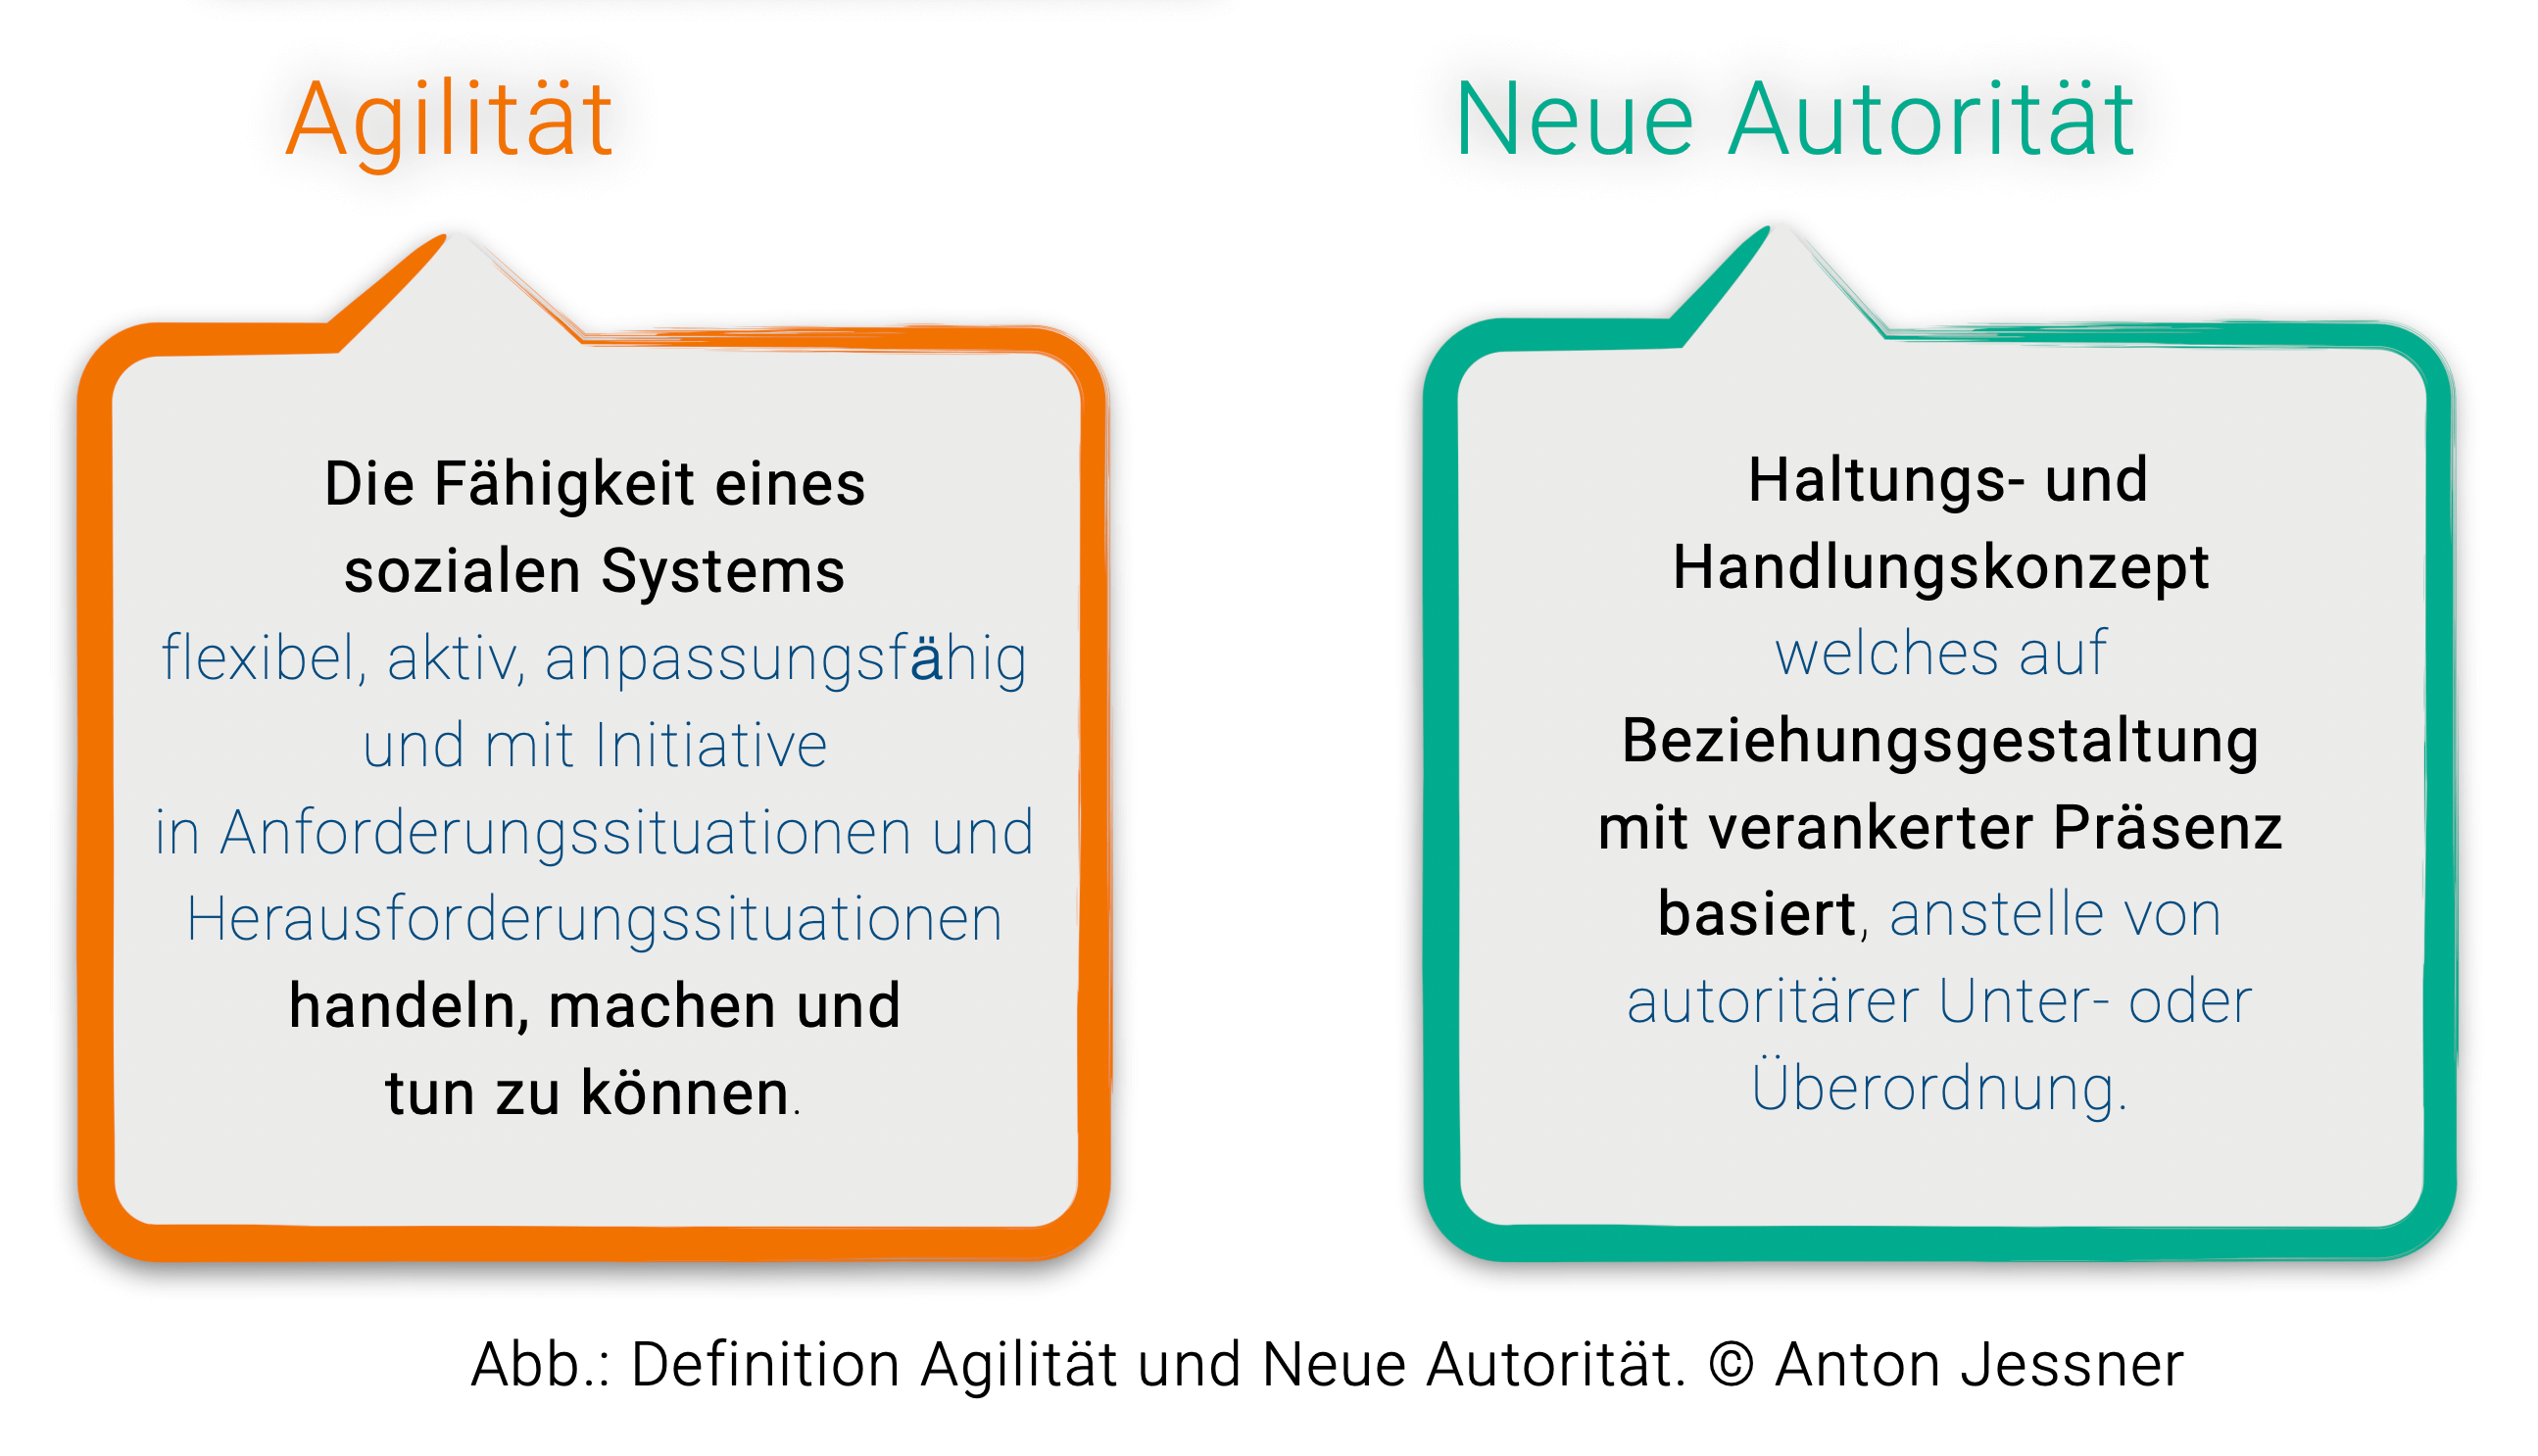 Abb.: Definition Agilität und Neue Autorität - © Anton Jessner